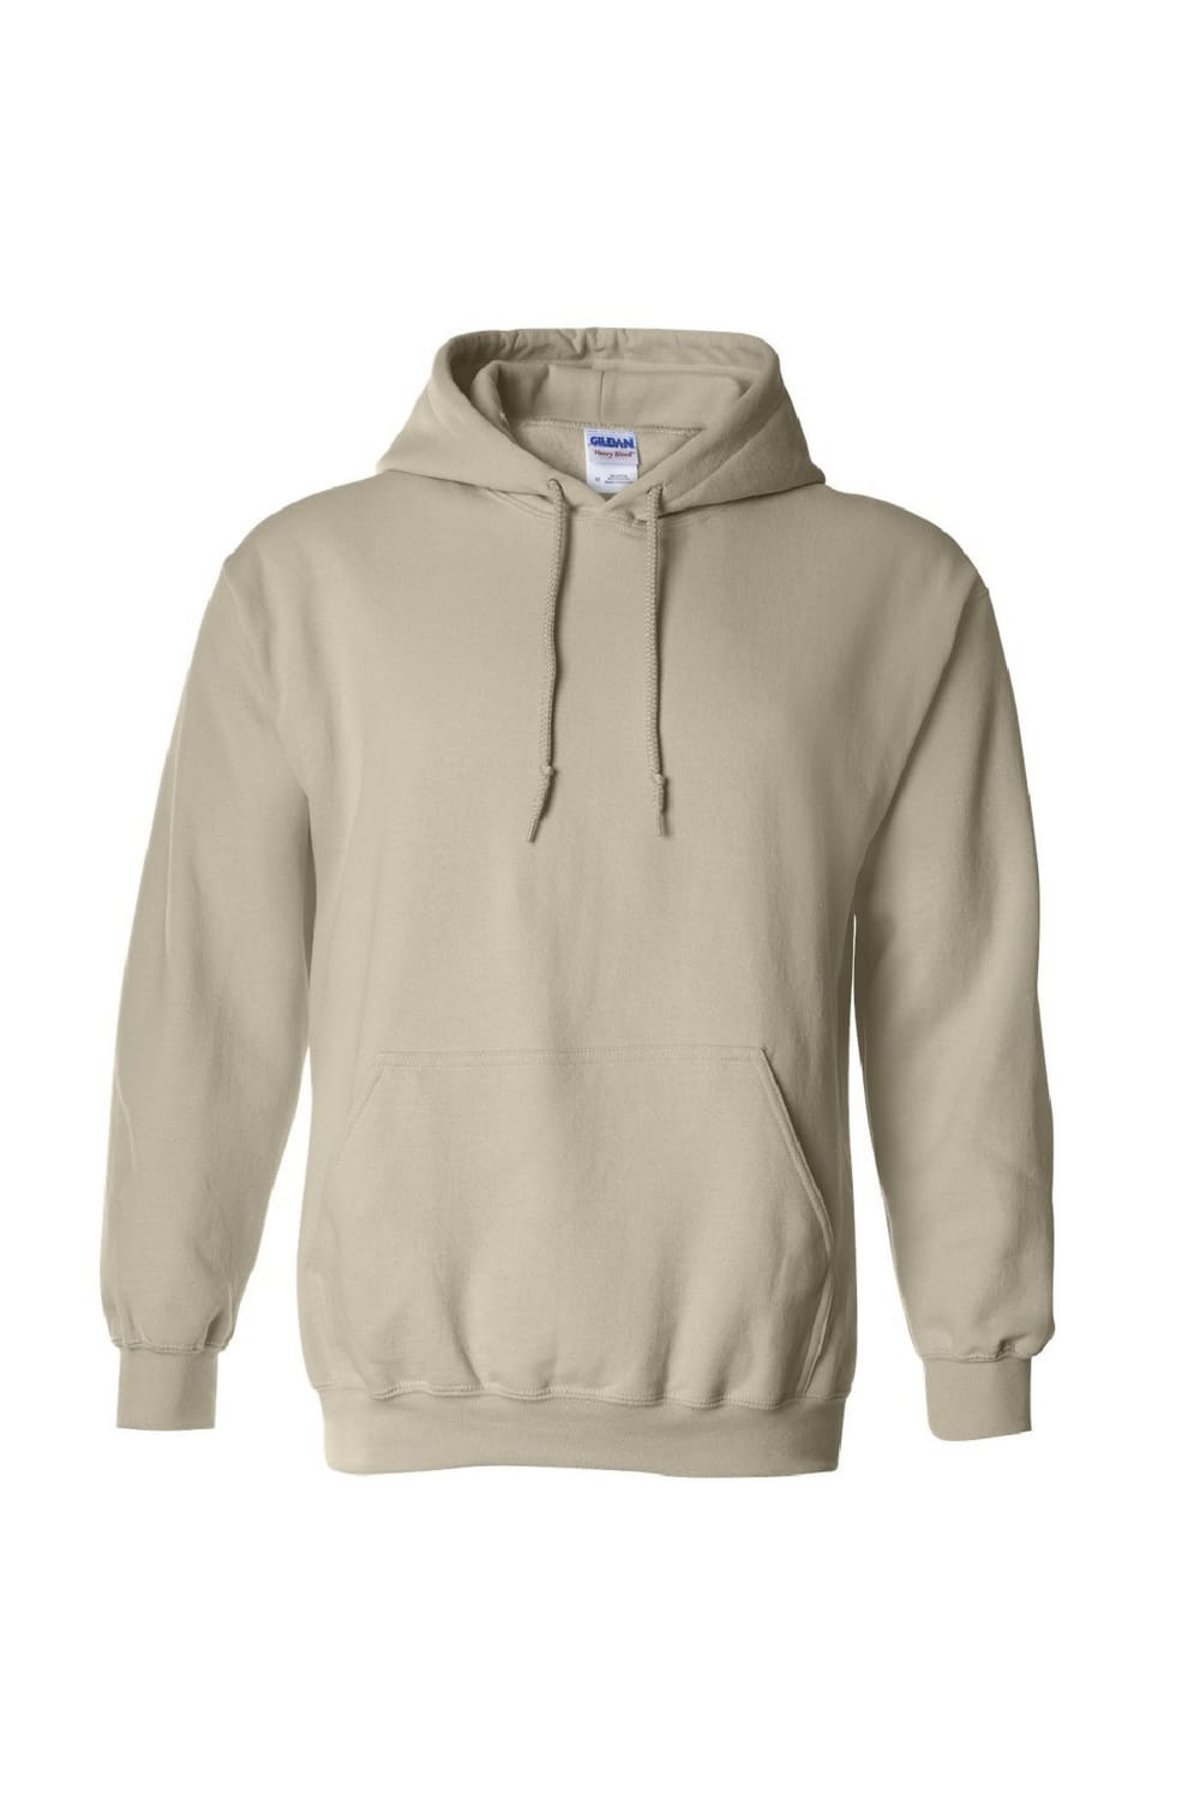 Gildan Gildan Heavy Blend Adult Unisex Hooded Sweatshirt/Hoodie (Sand)